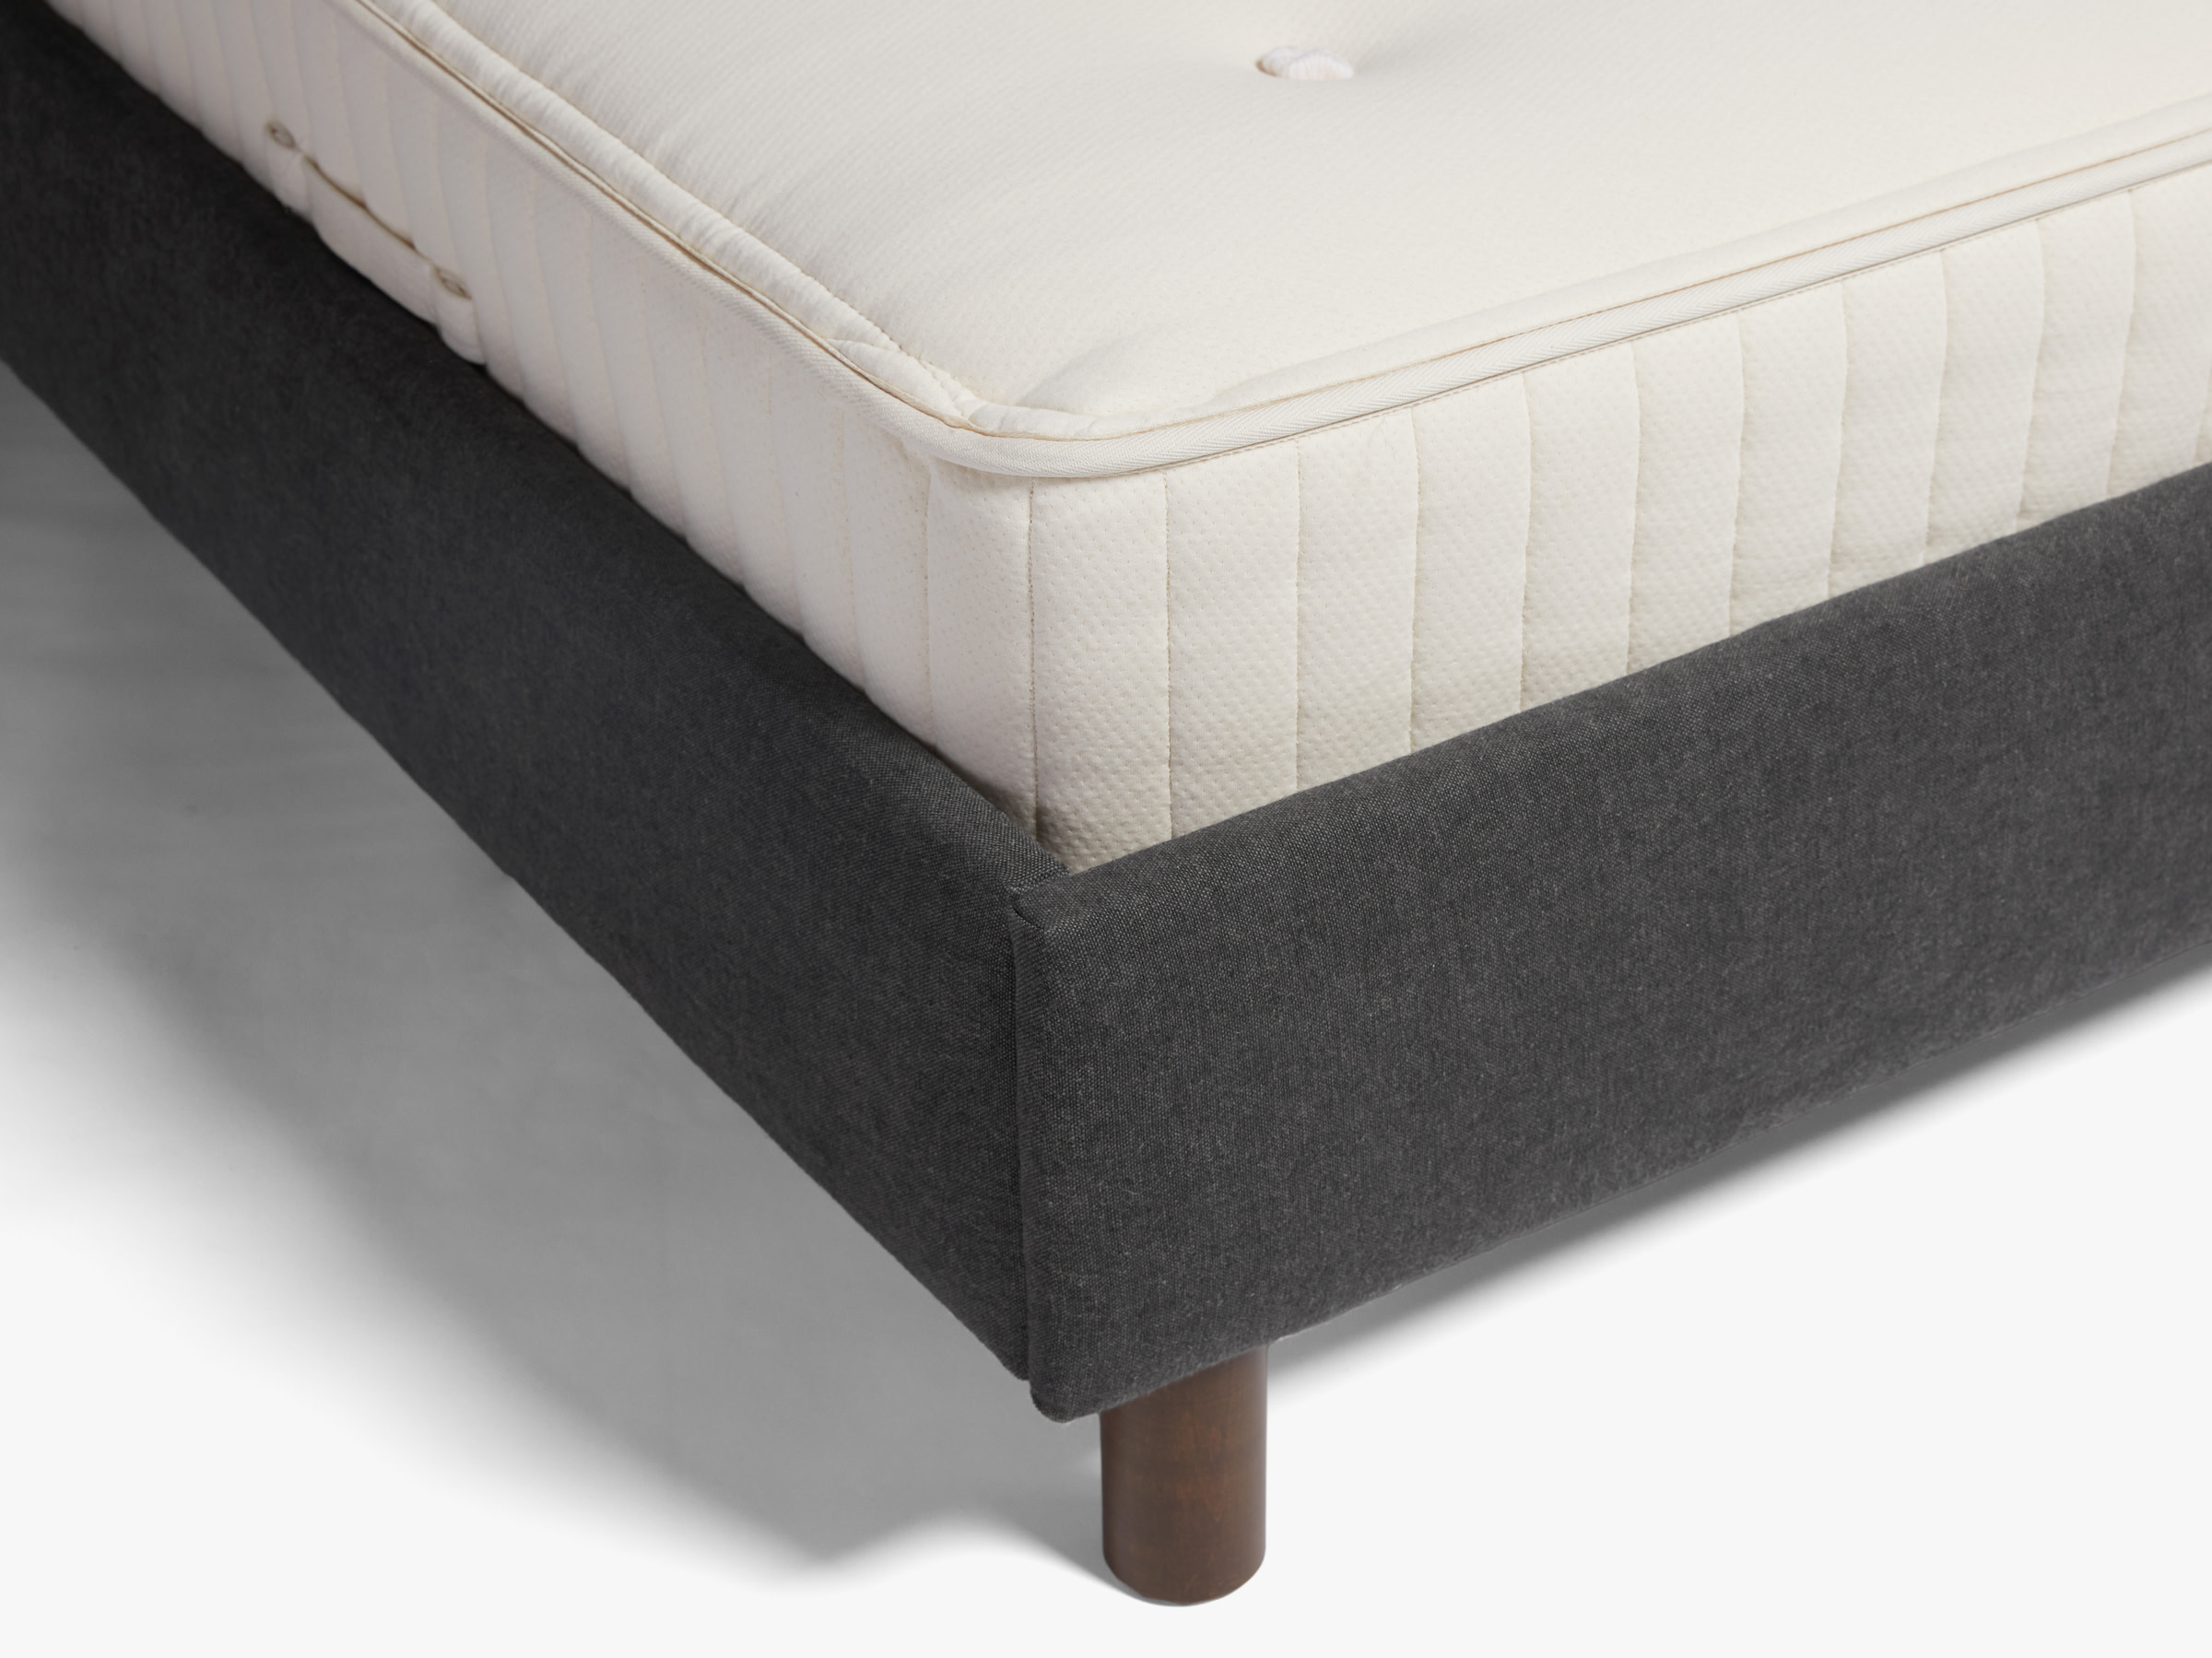 Charcoal Linen Cotton Blend Dune Bed Frame